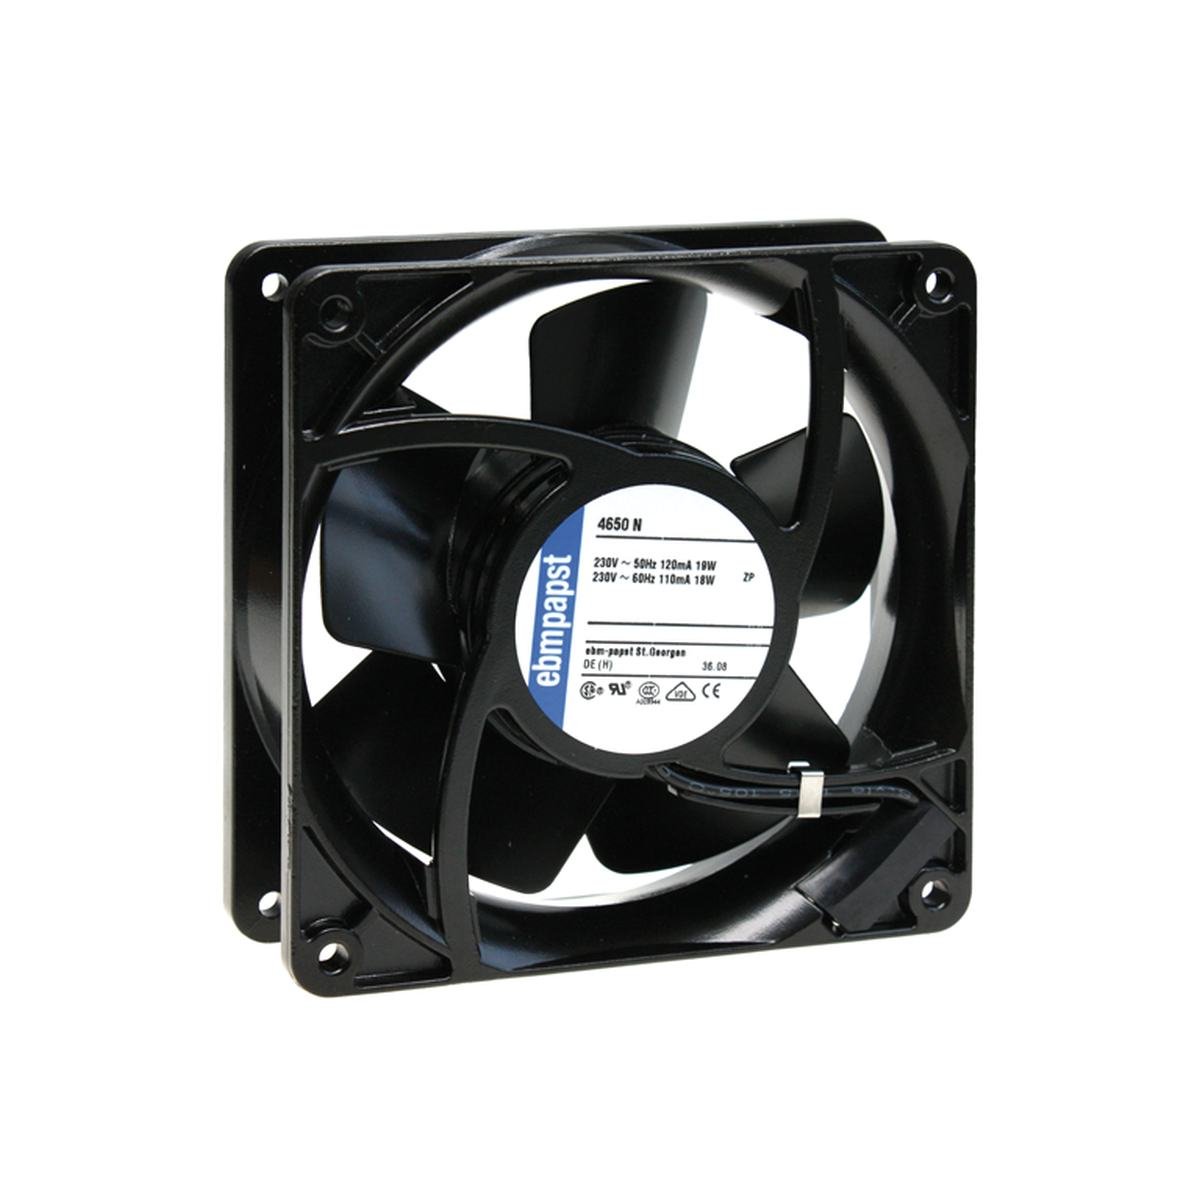 Axial ventilator - Pabst 4650N